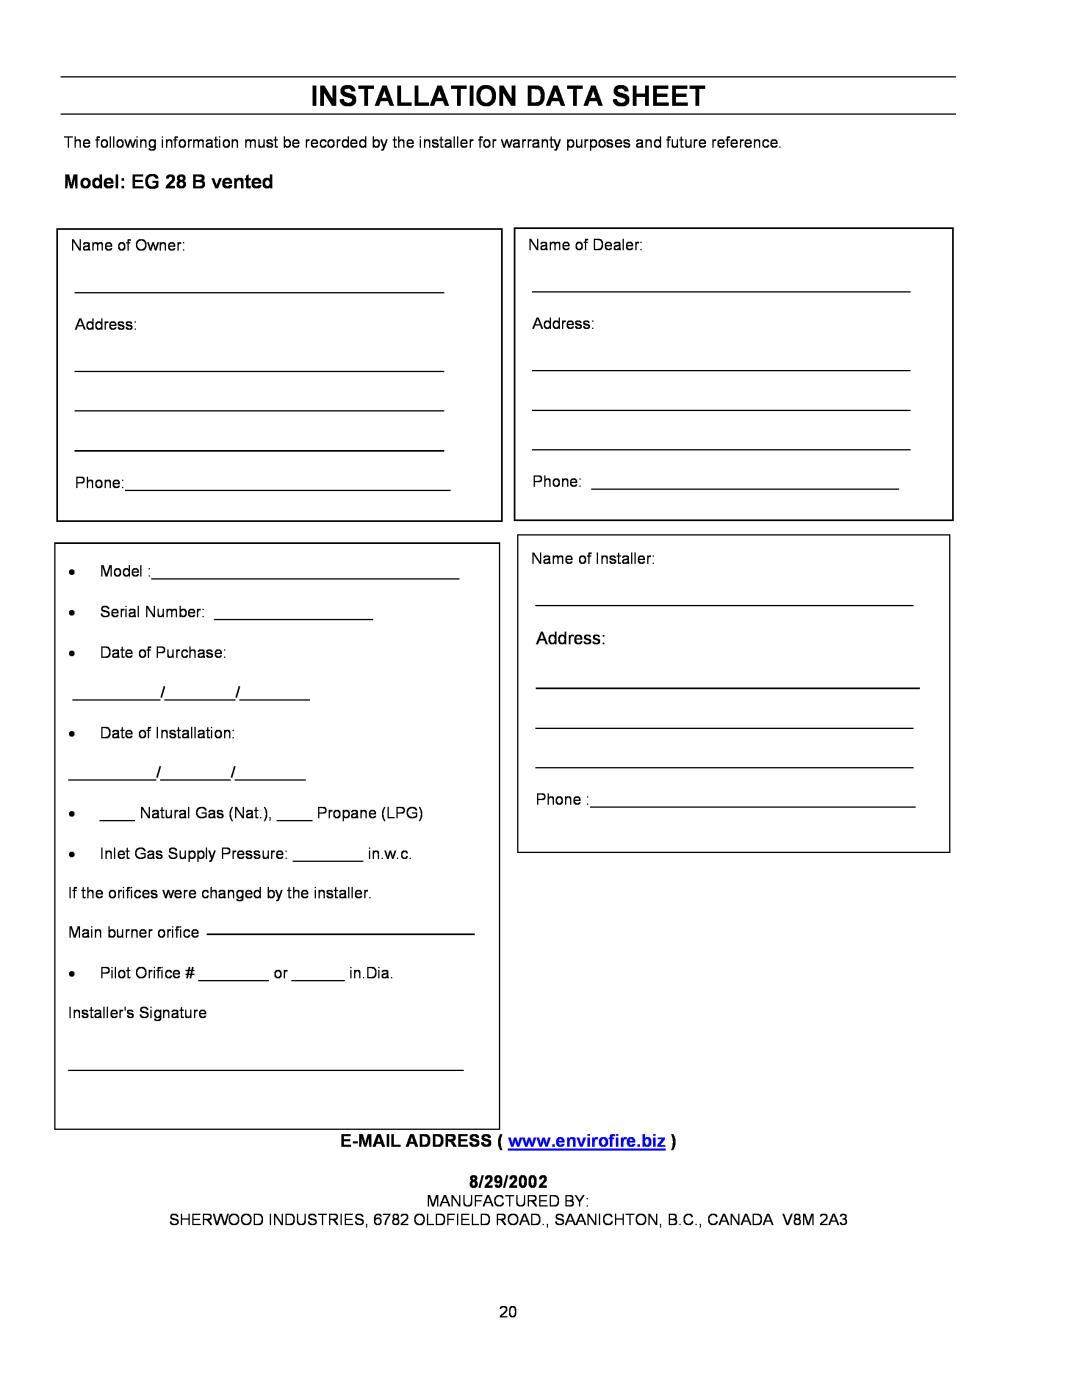 Enviro owner manual Installation Data Sheet, Model EG 28 B vented 